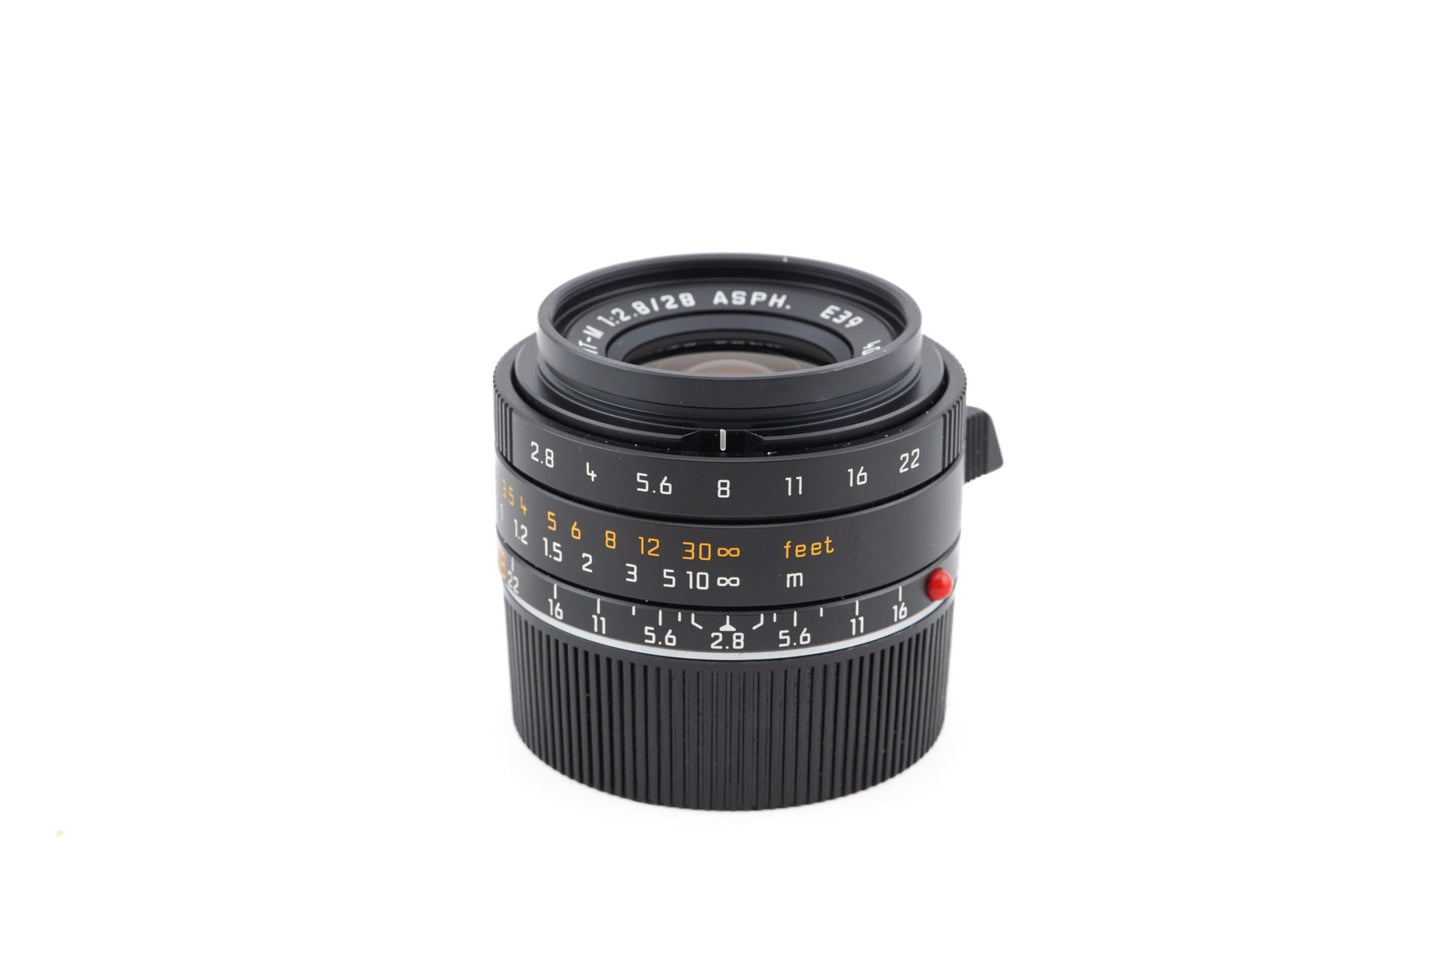 Leica 28mm f2.8 Elmarit-M ASPH. (11 606) - Lens